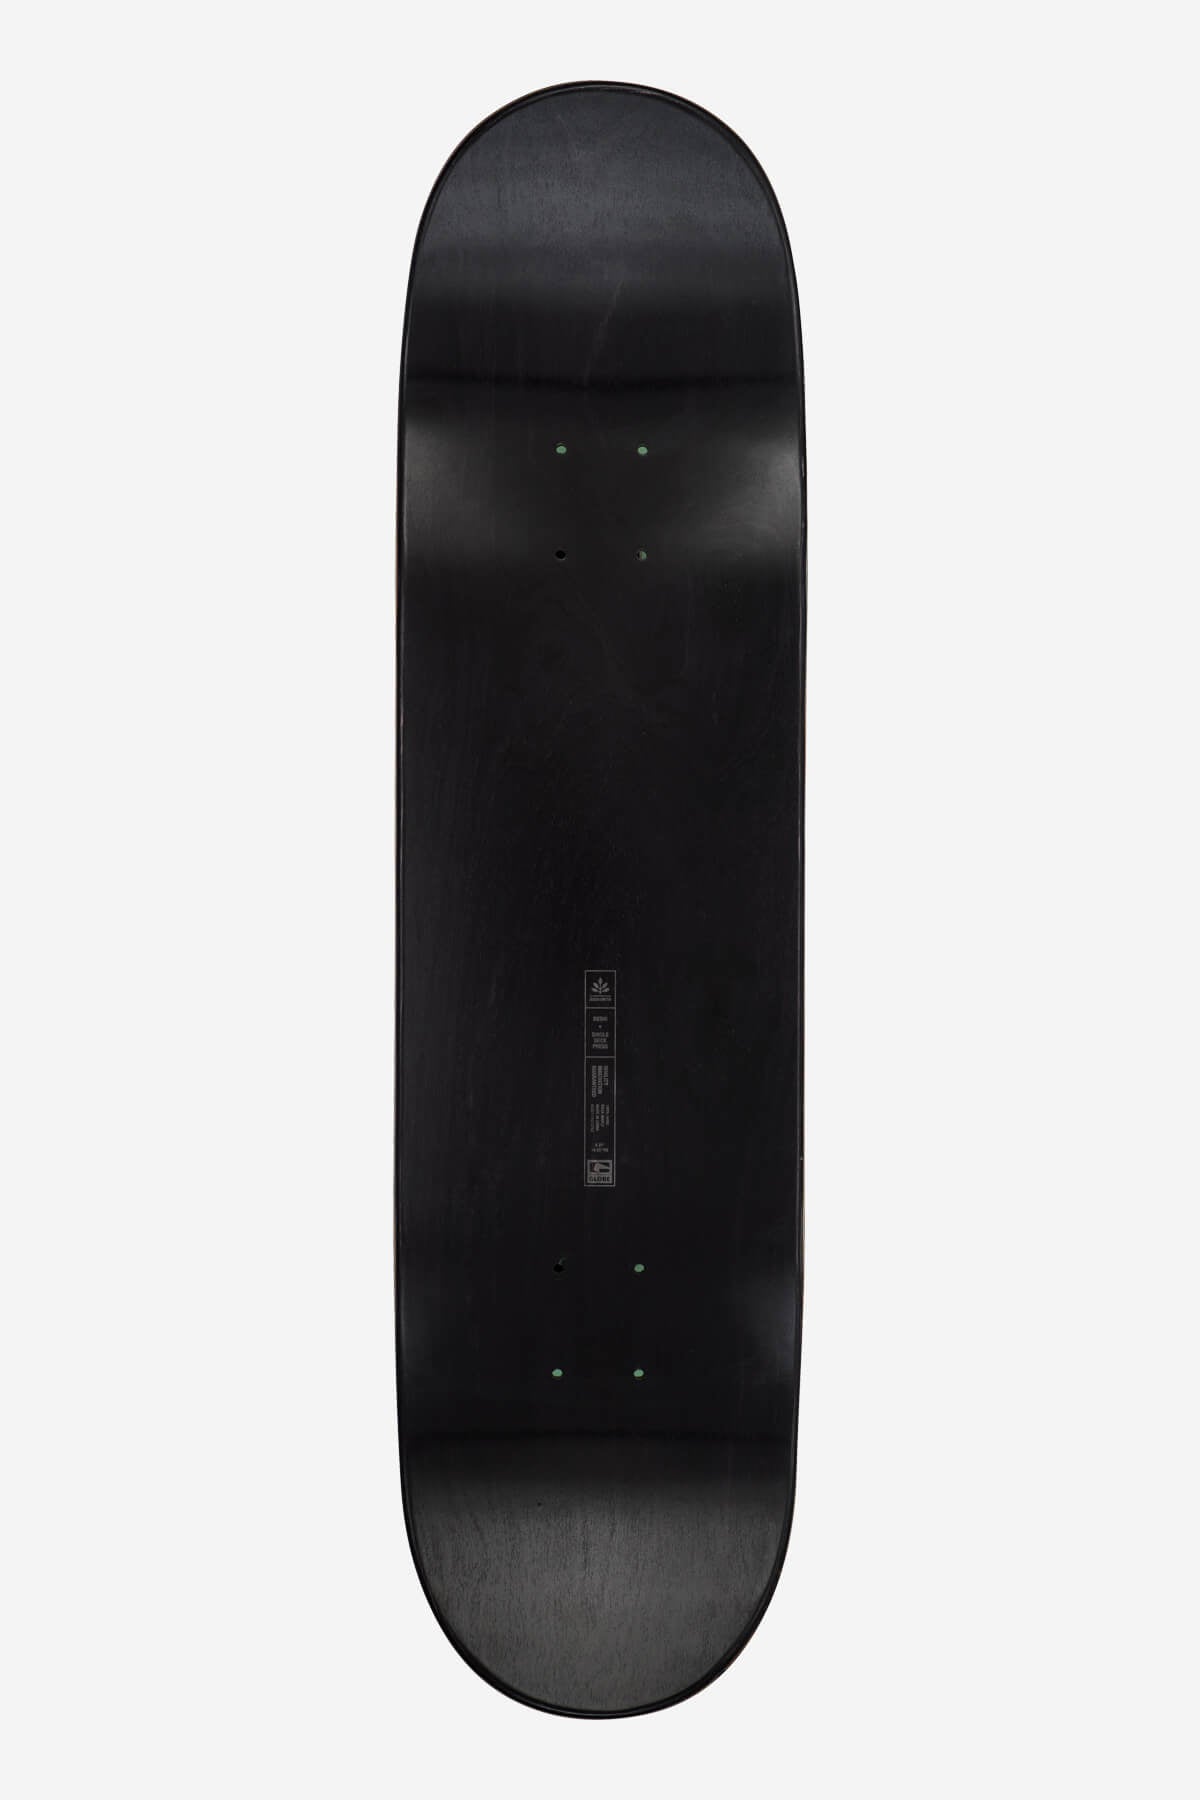 Globe - G1 Lineform 2 - Mint - 8.25" Skateboard Deck